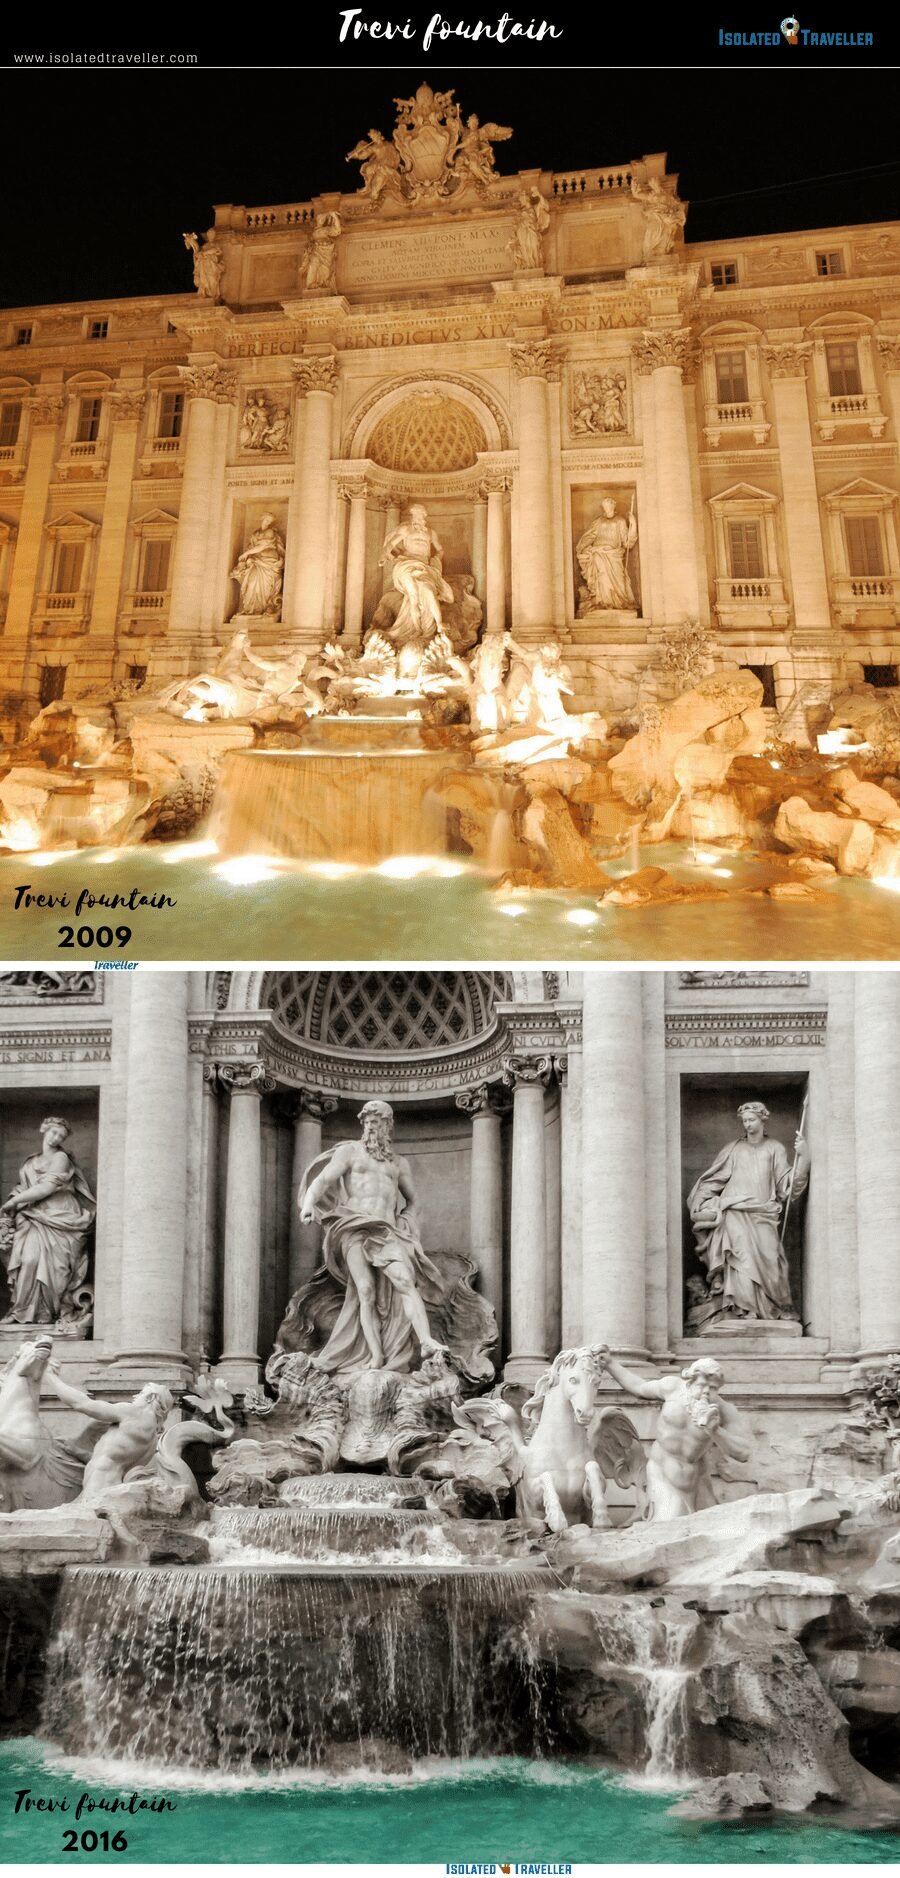 Evolution of Trevi fountain